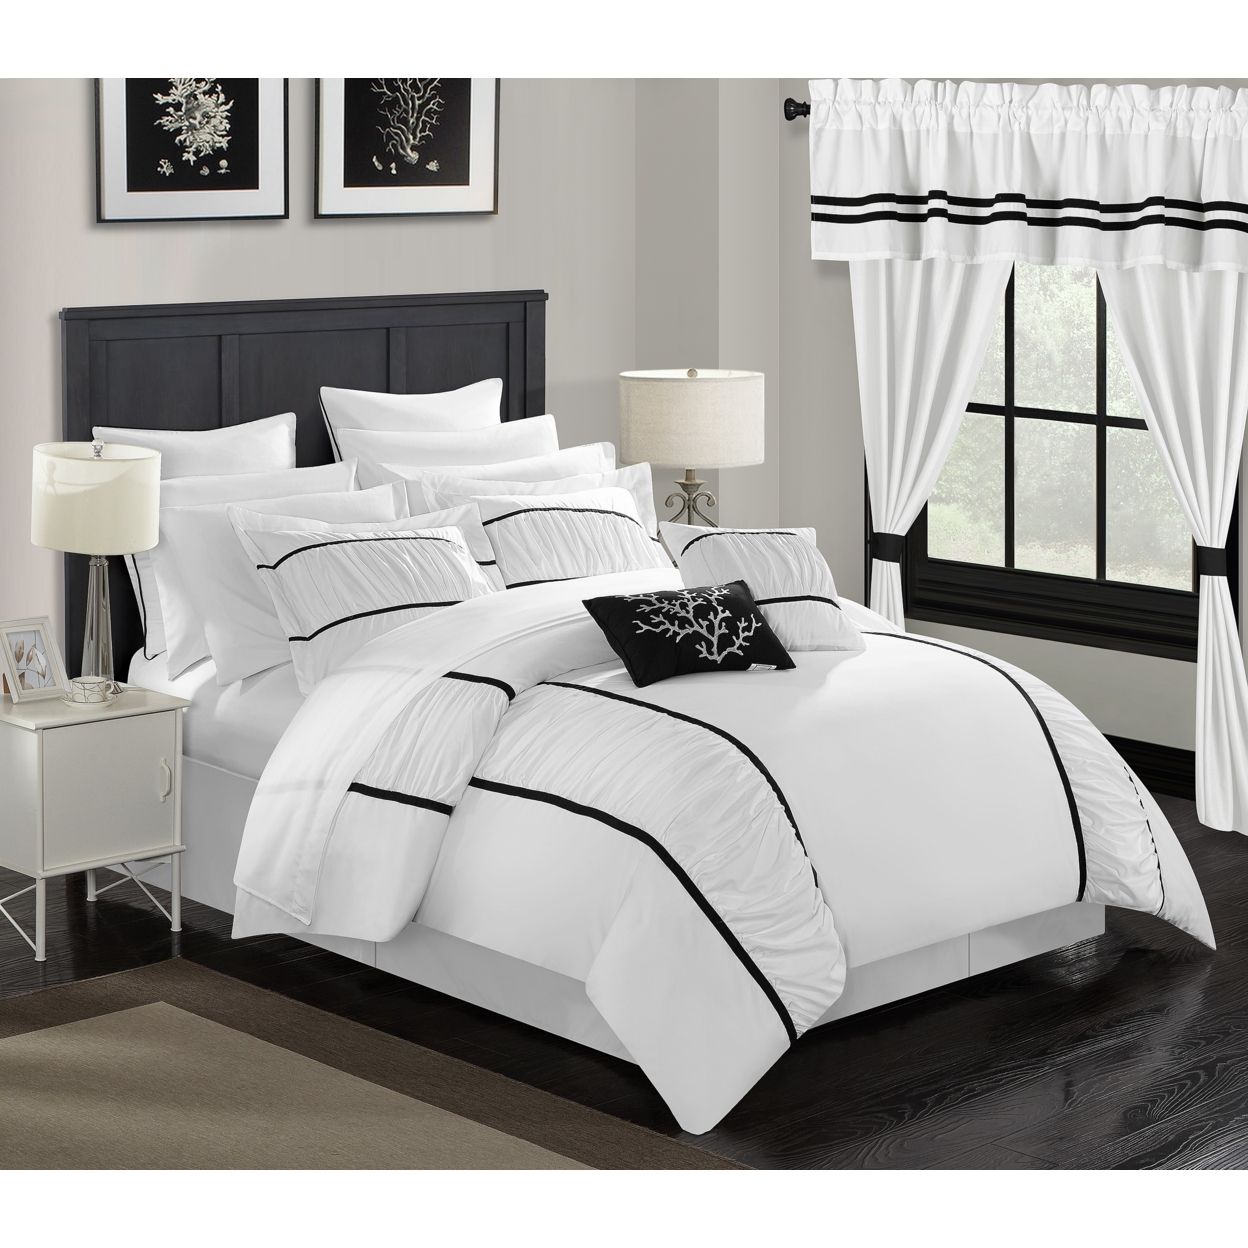 24 Piece Marian Complete Bedroom In A Bag Pinch Pleat Ruffled Designer Embellished Bed In A Bag Comforter Set - Grey, Queen